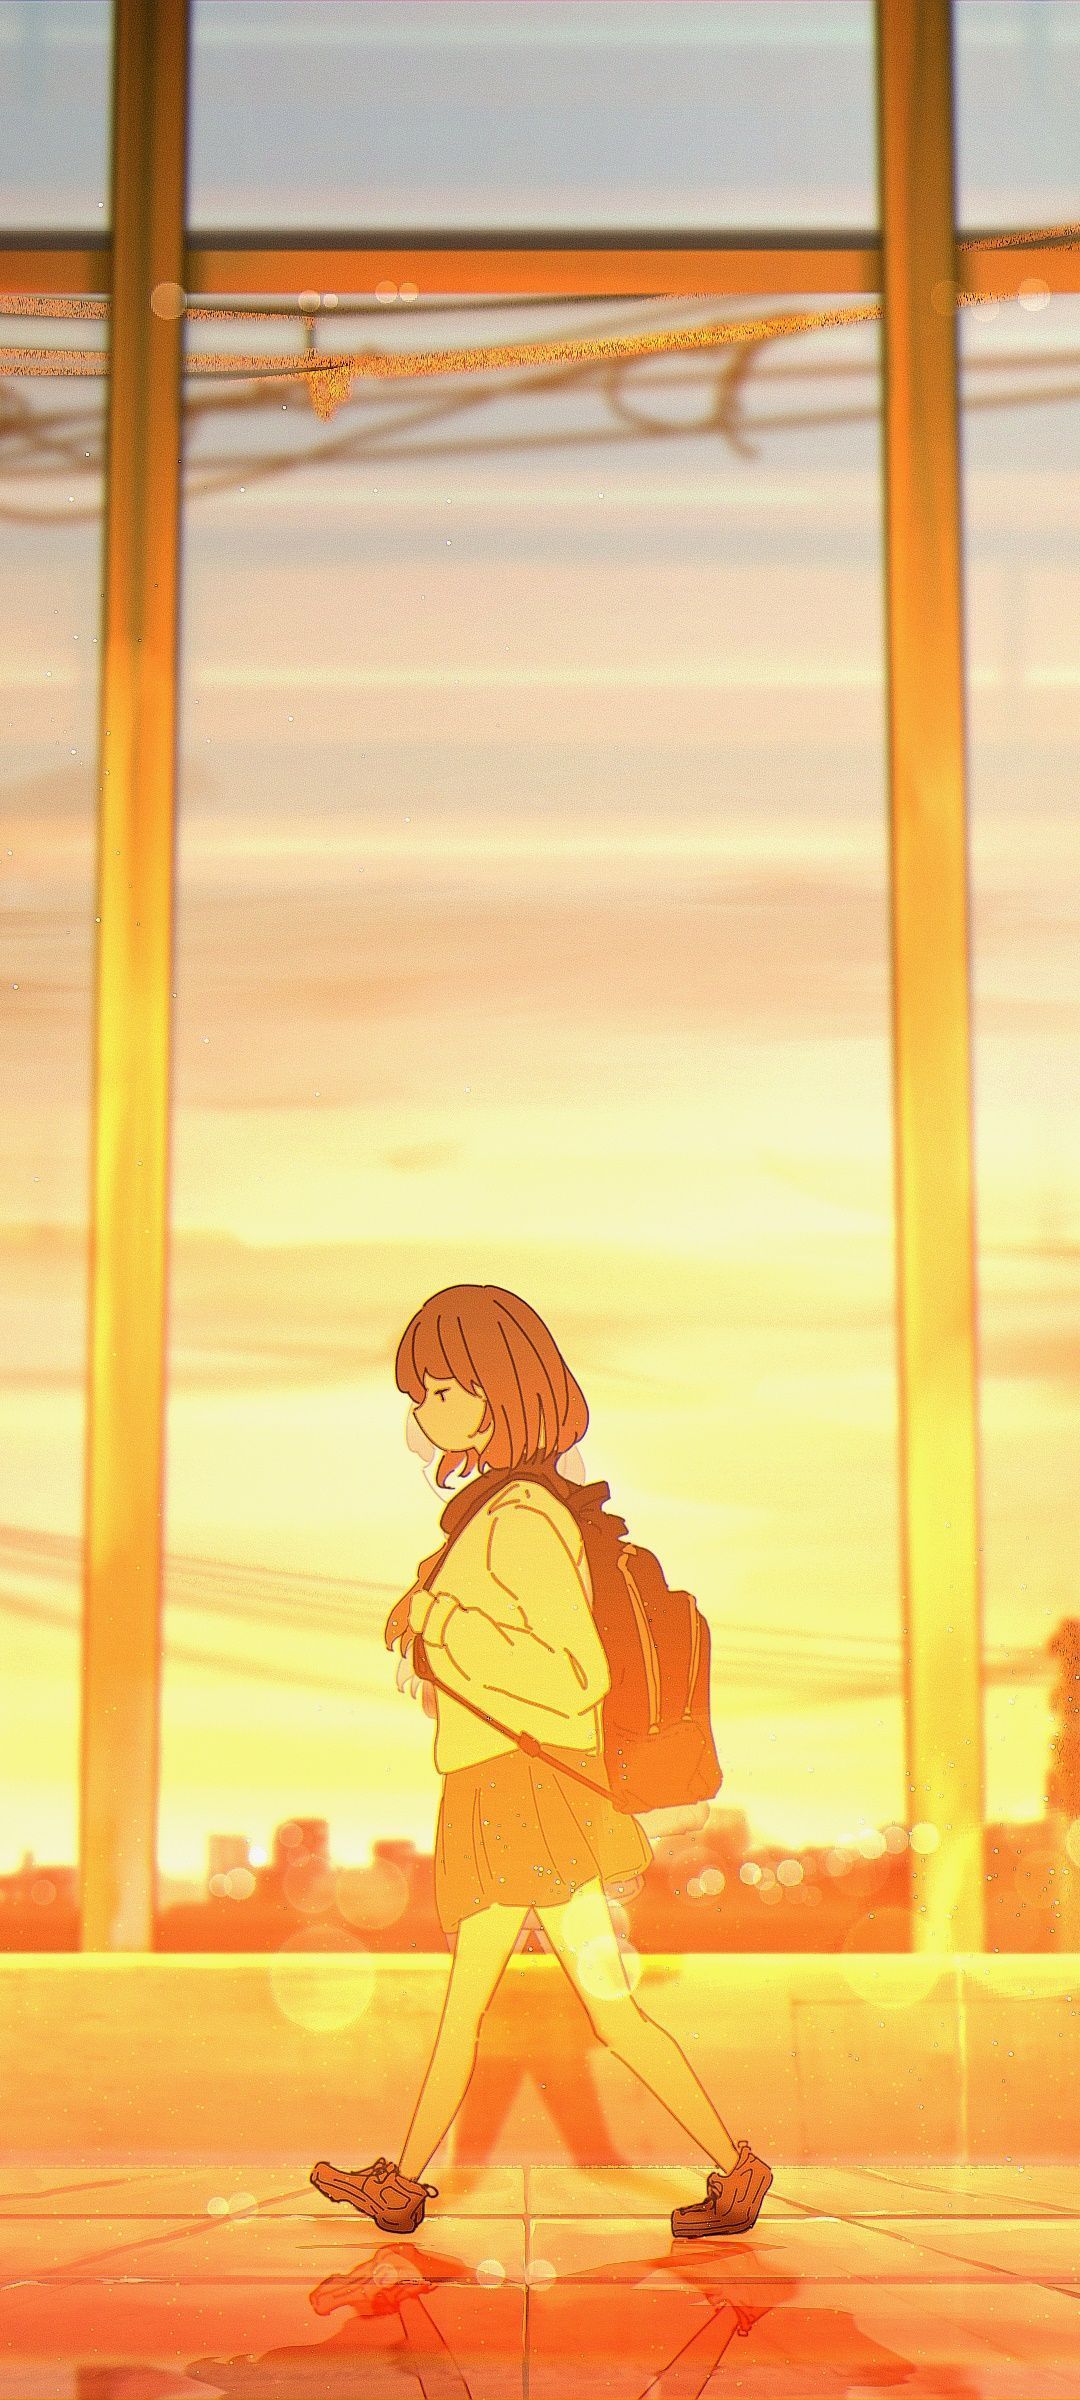 Wallpaper / Anime Original Phone Wallpaper, Sunset, 1080x2400 free download